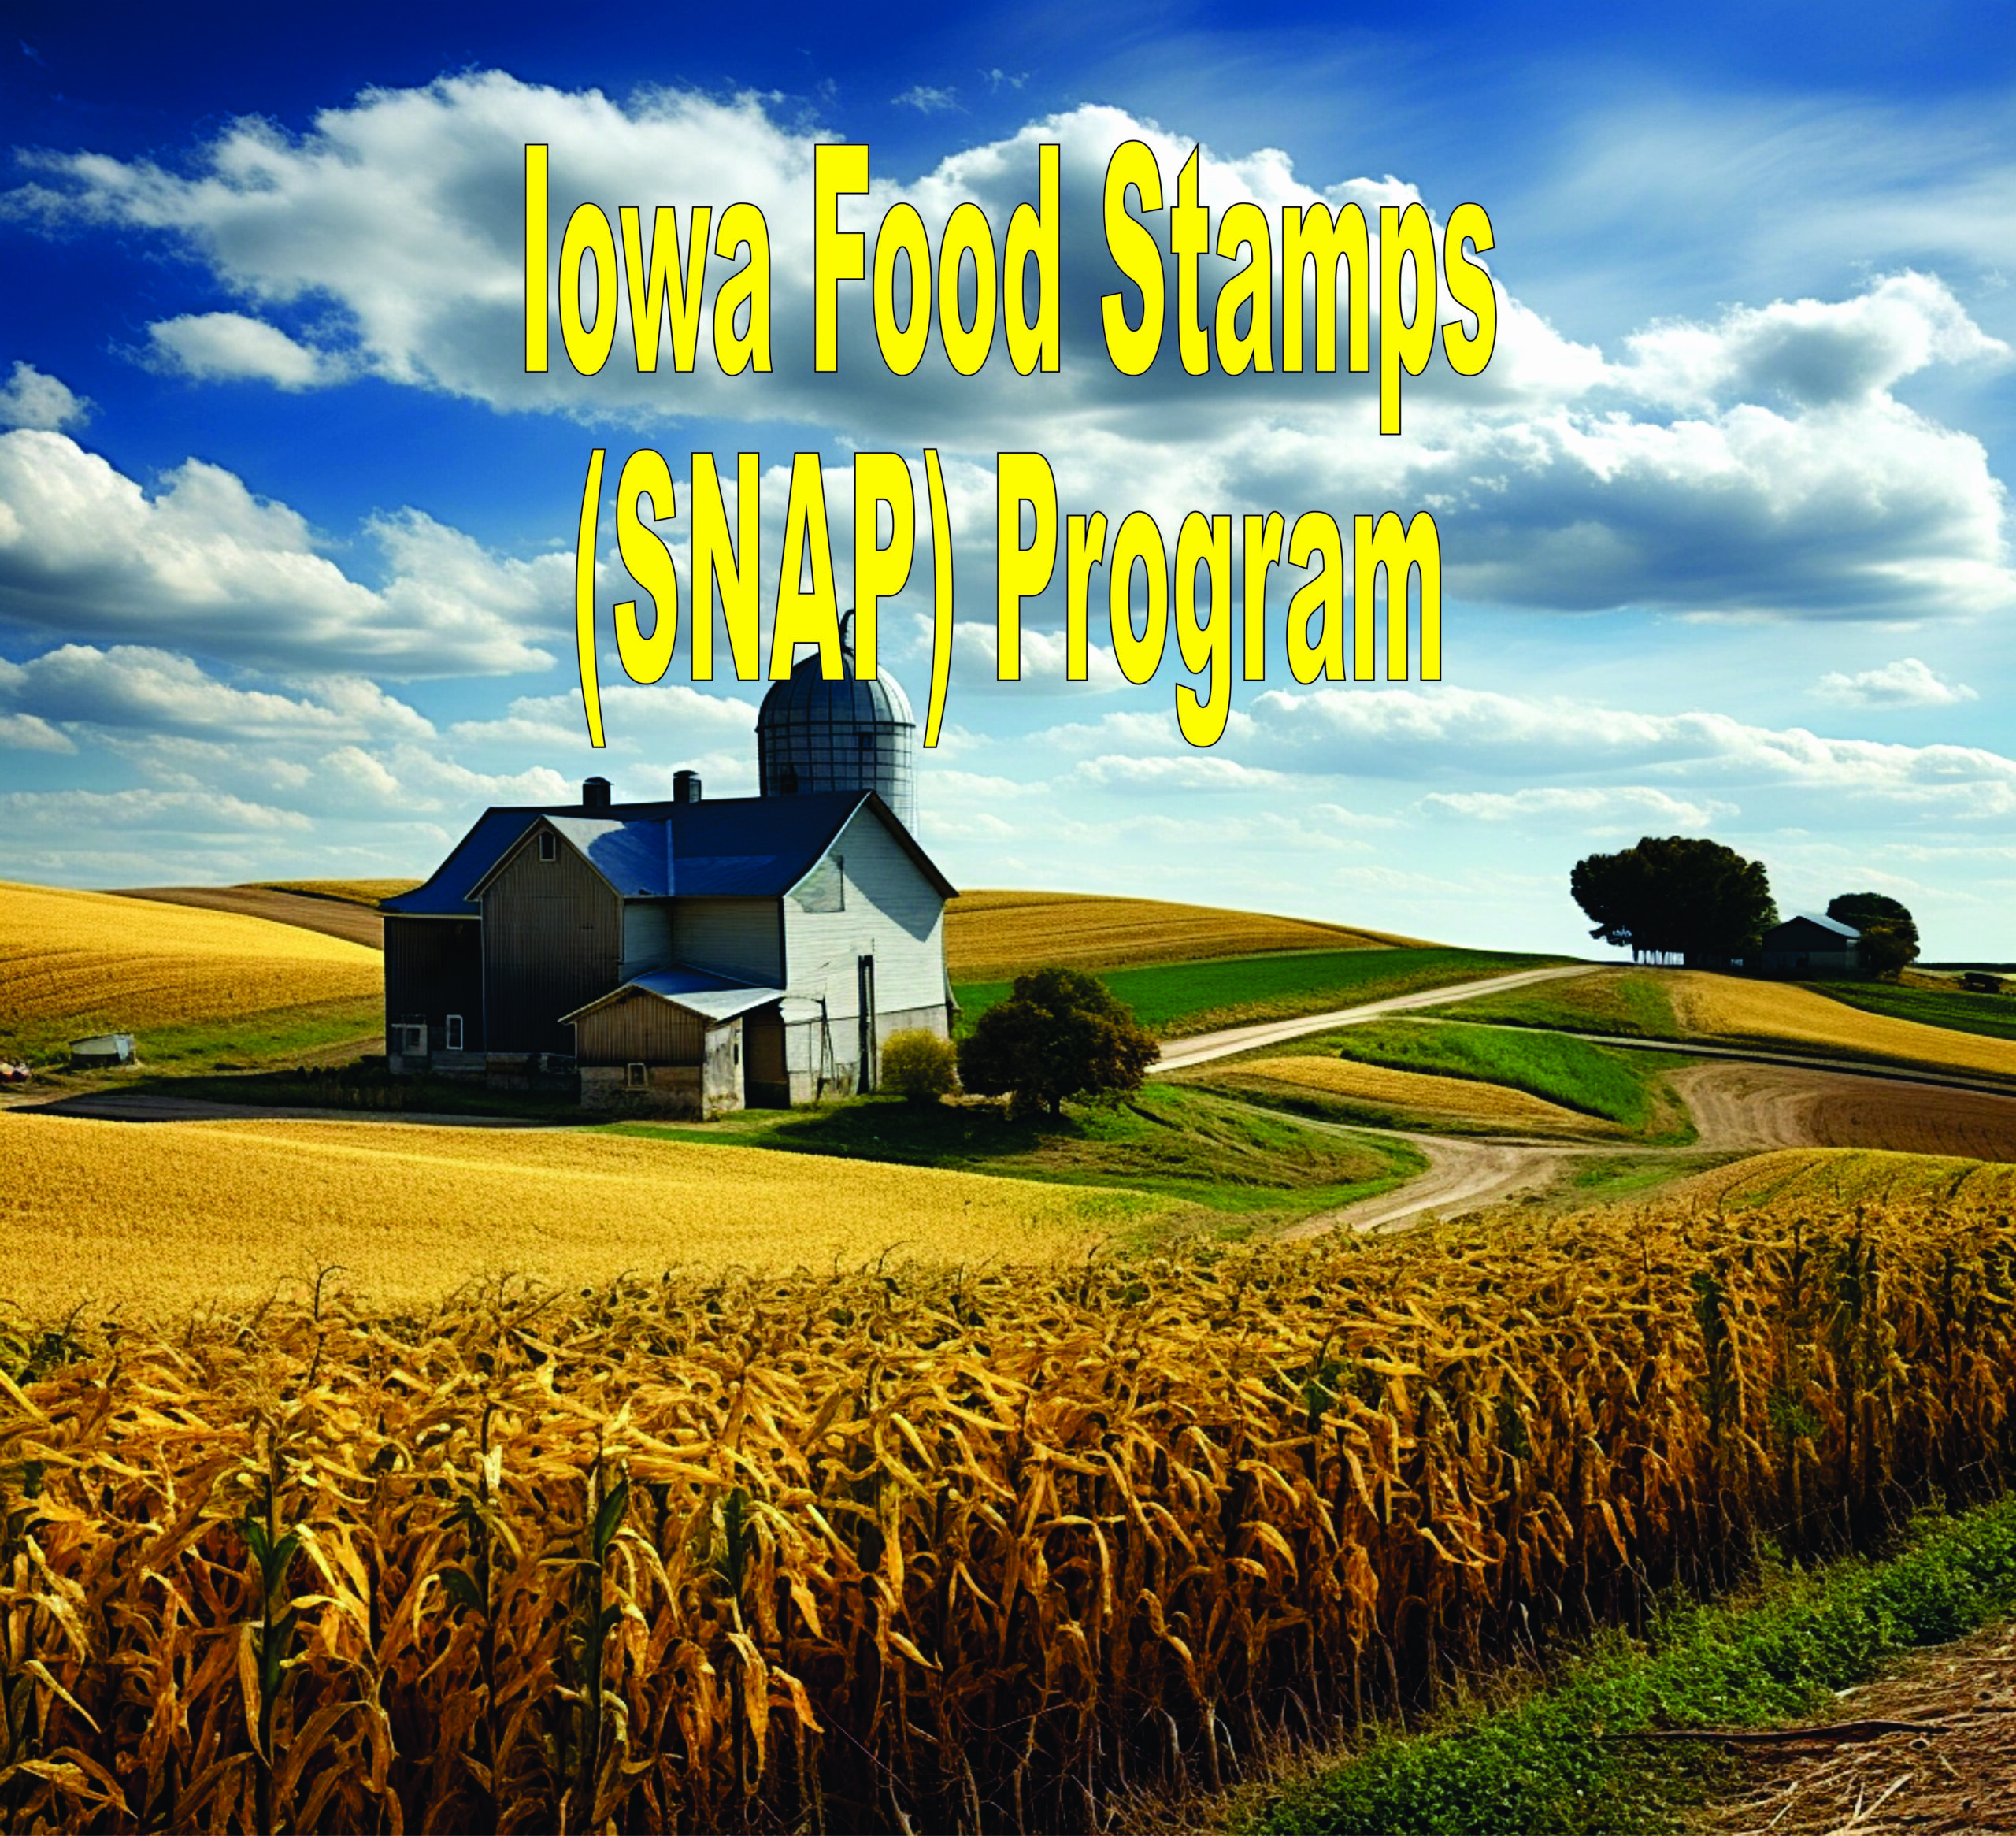 Iowa Food Stamps (snap) Program